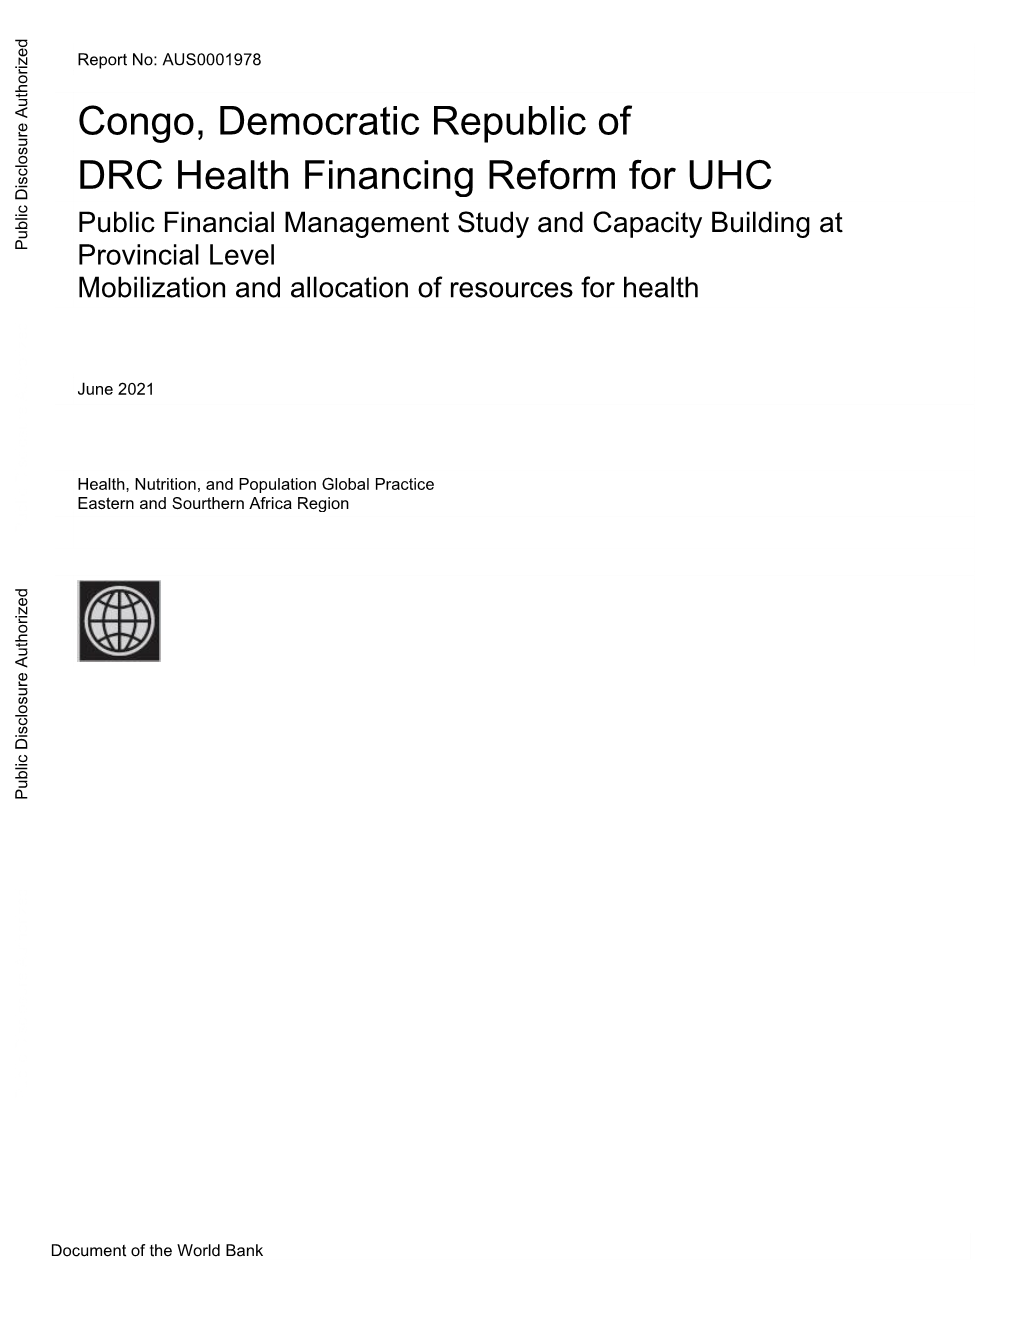 DRC Health Financing Reform For